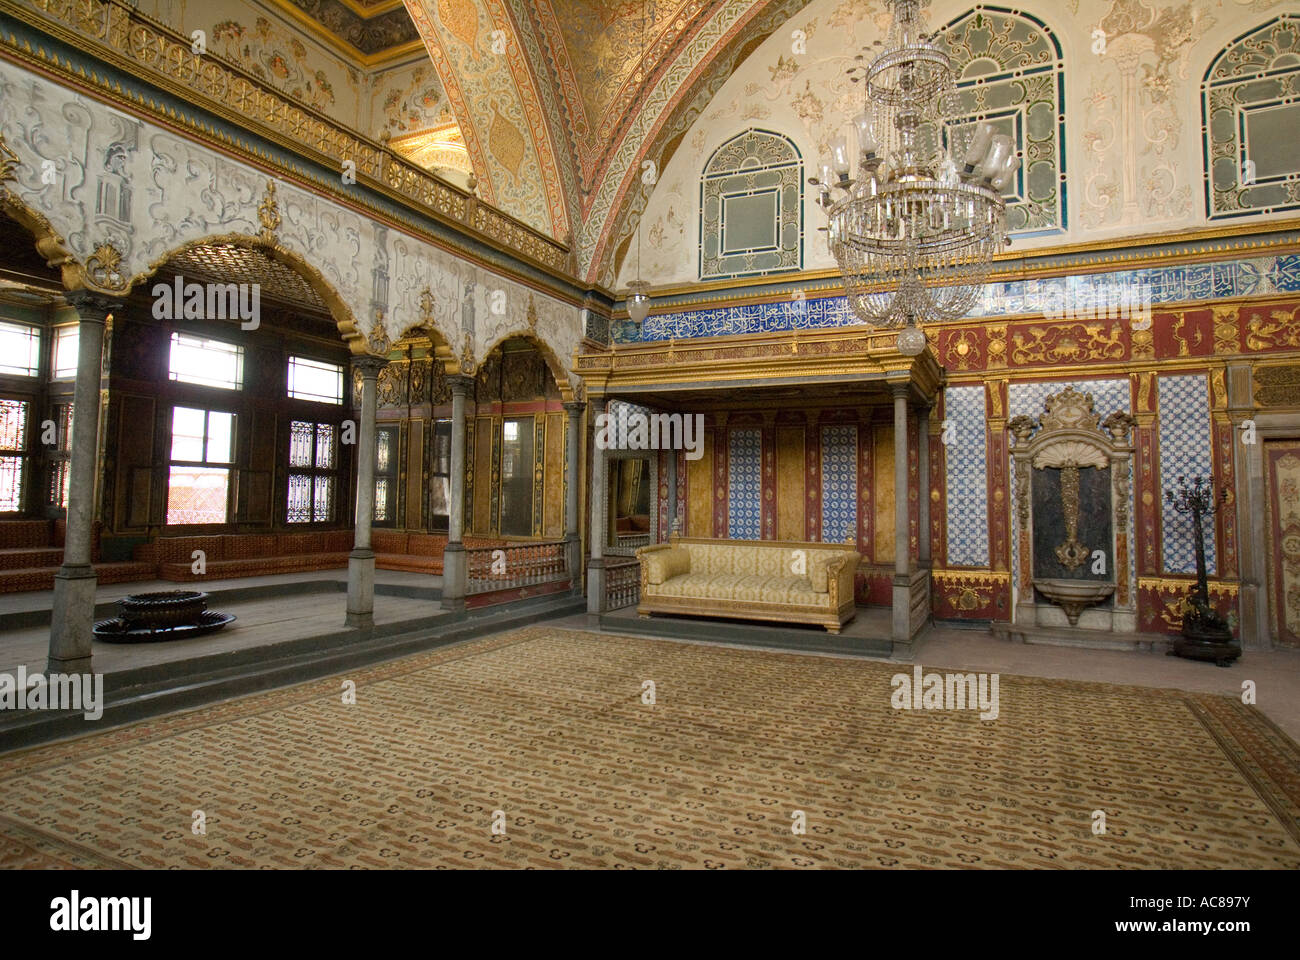 Topkapi Palace, Sultan's private quarters in Harem, Istanbul Stock Photo